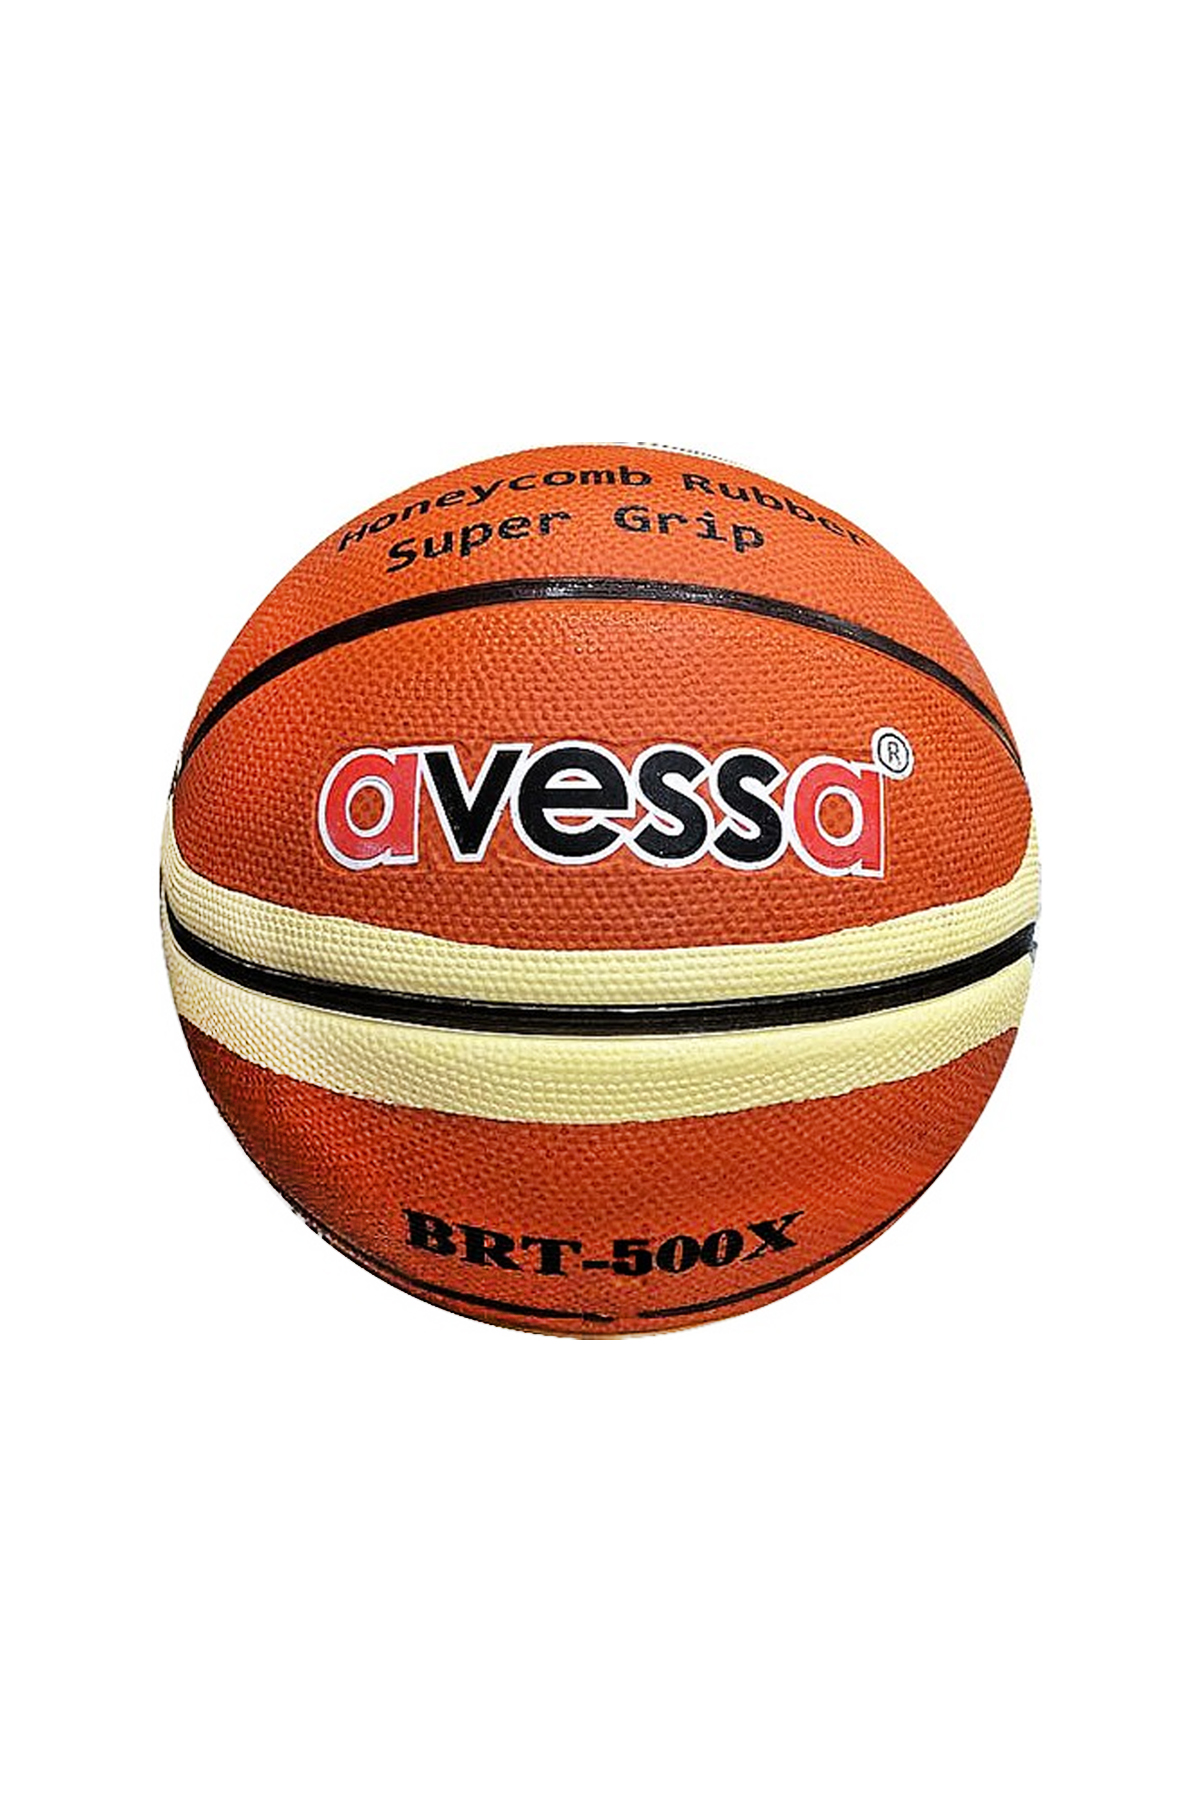 Avessa Basketbol Topu (BR-600X)